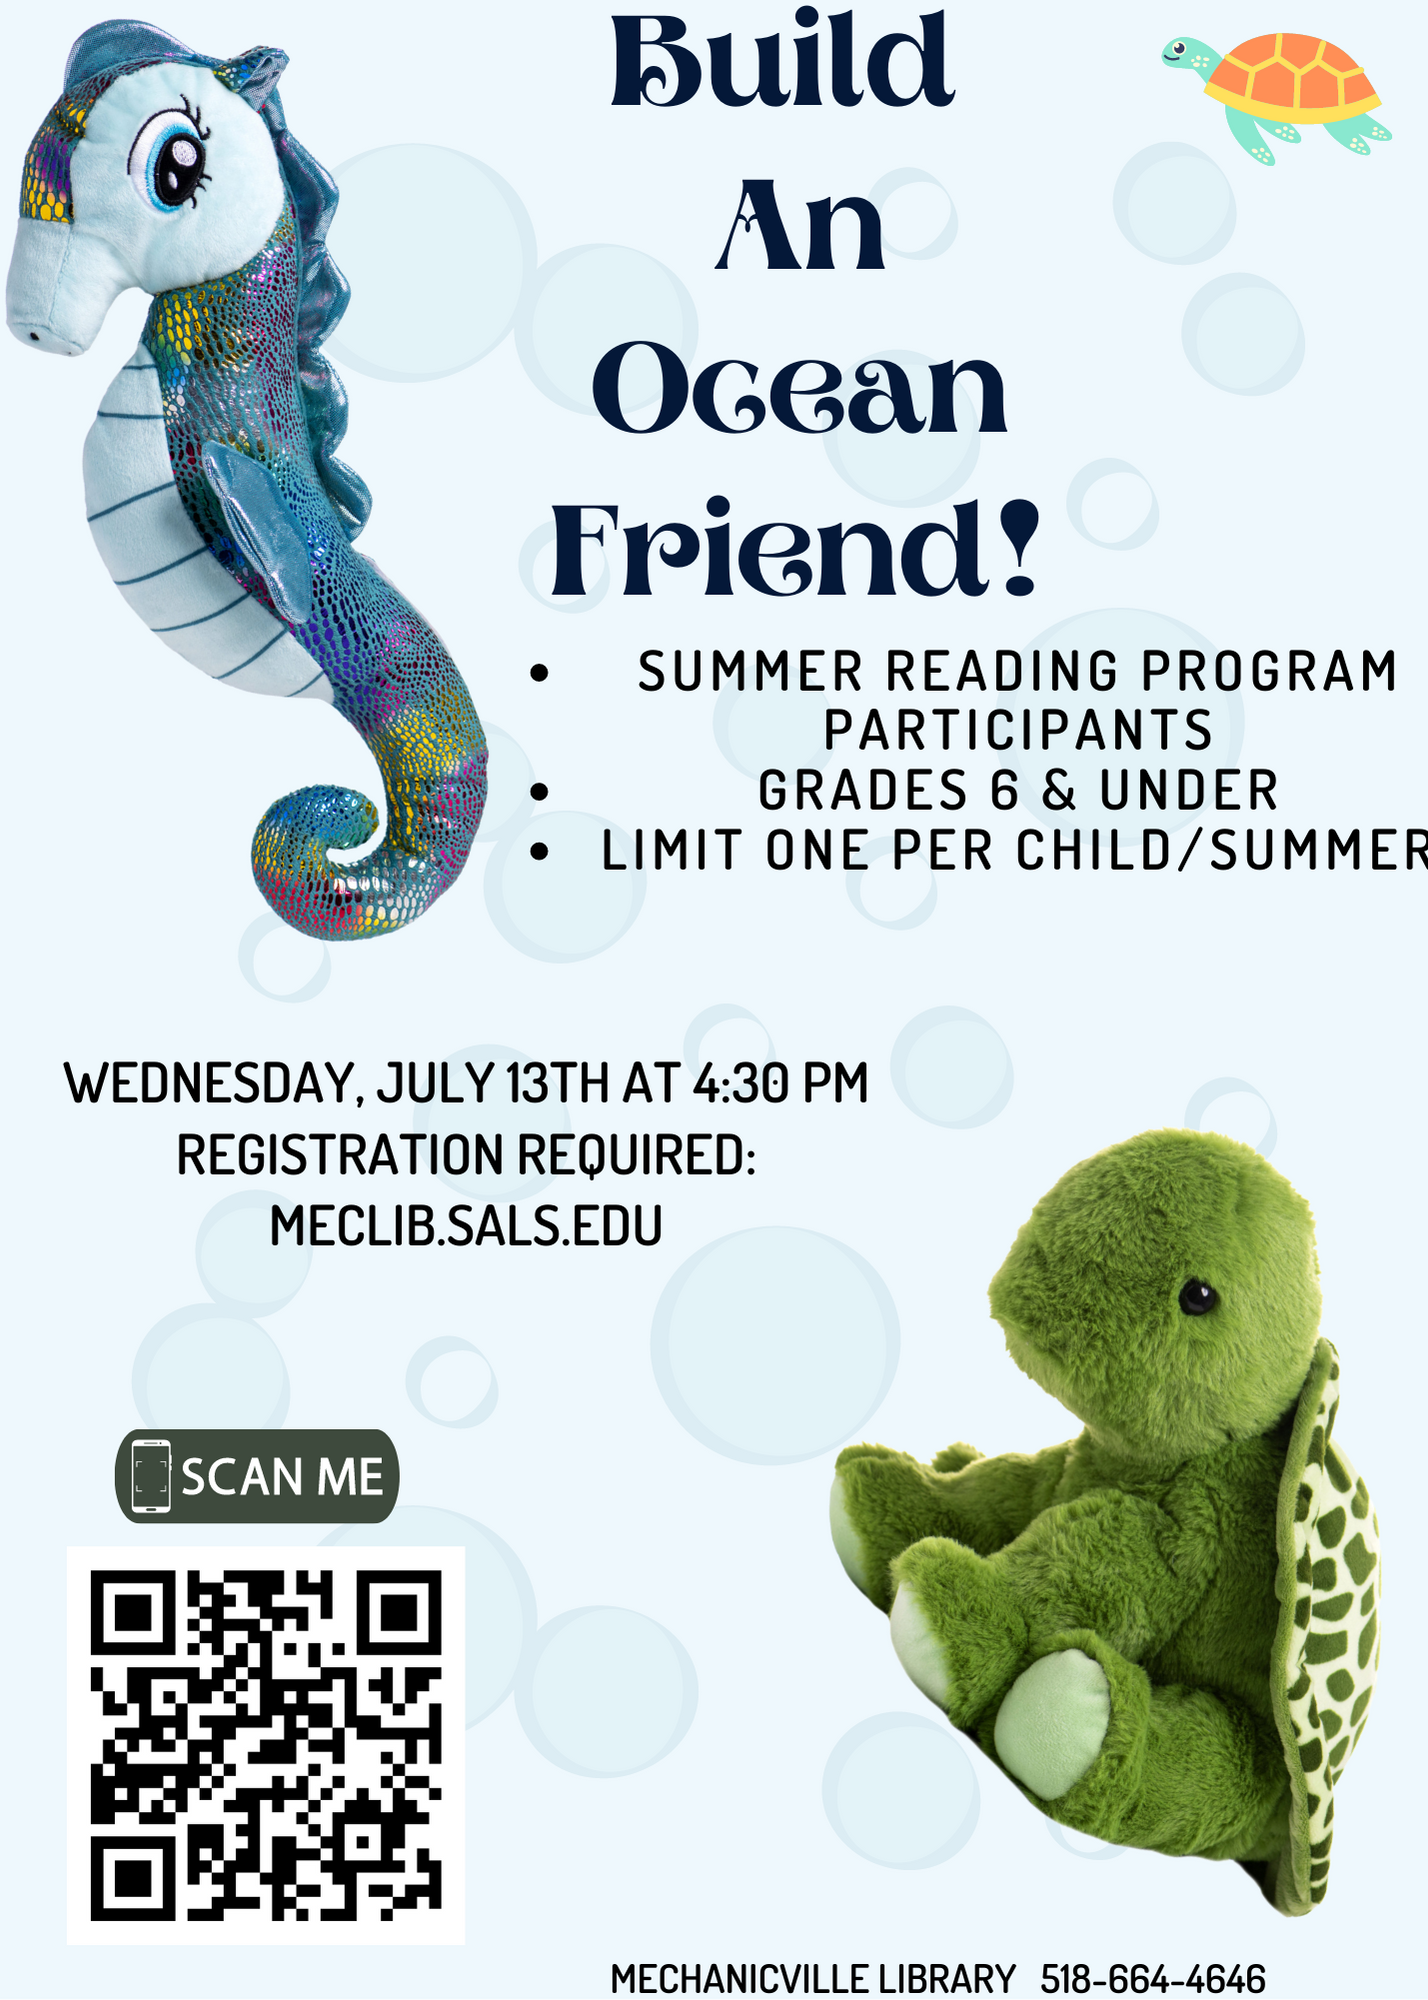 Build an Ocean Friend! Summer Reading Program Participants Grades 6 & Under